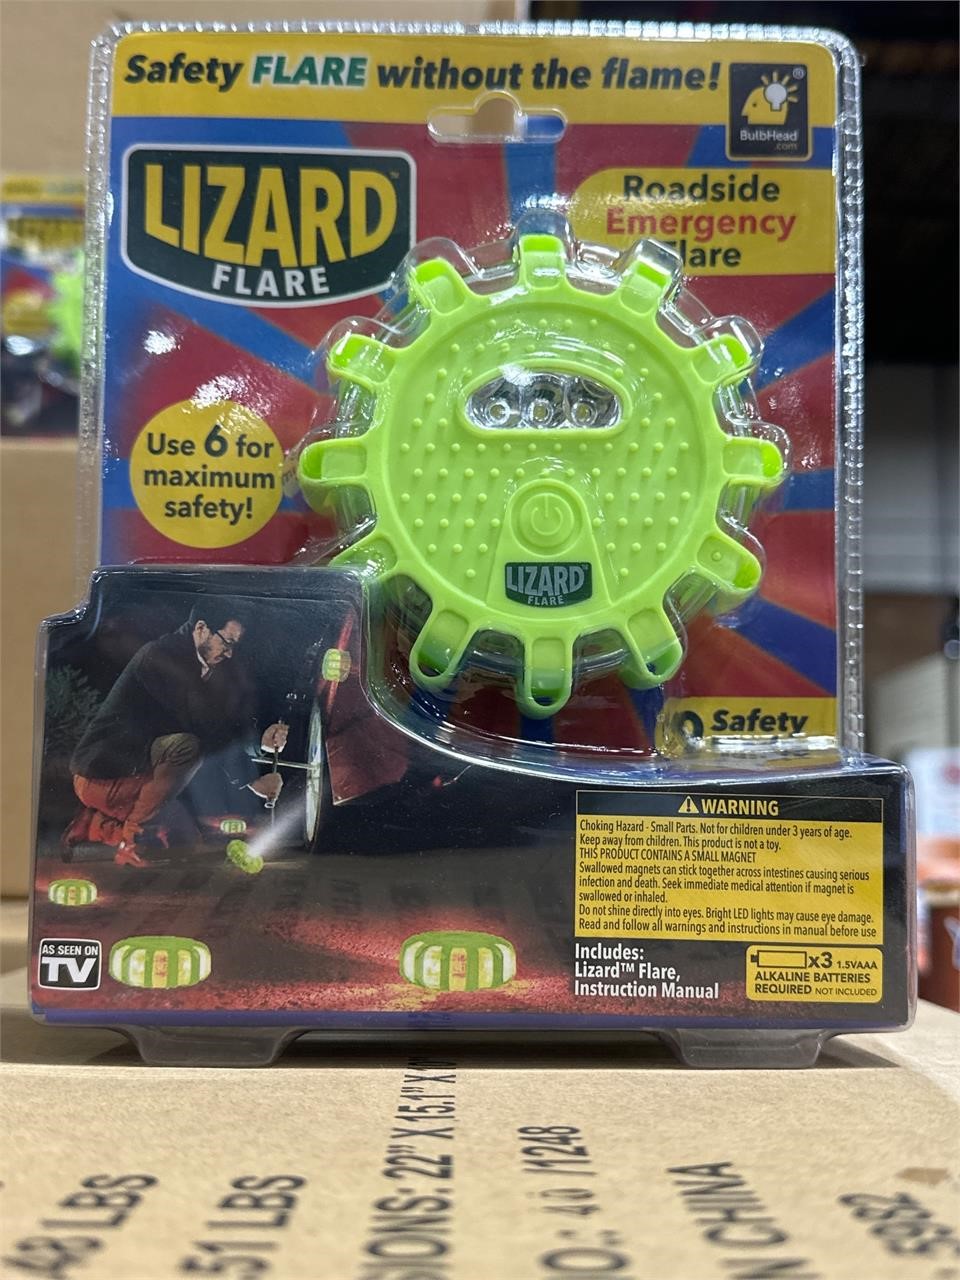 Lizard Safety flare